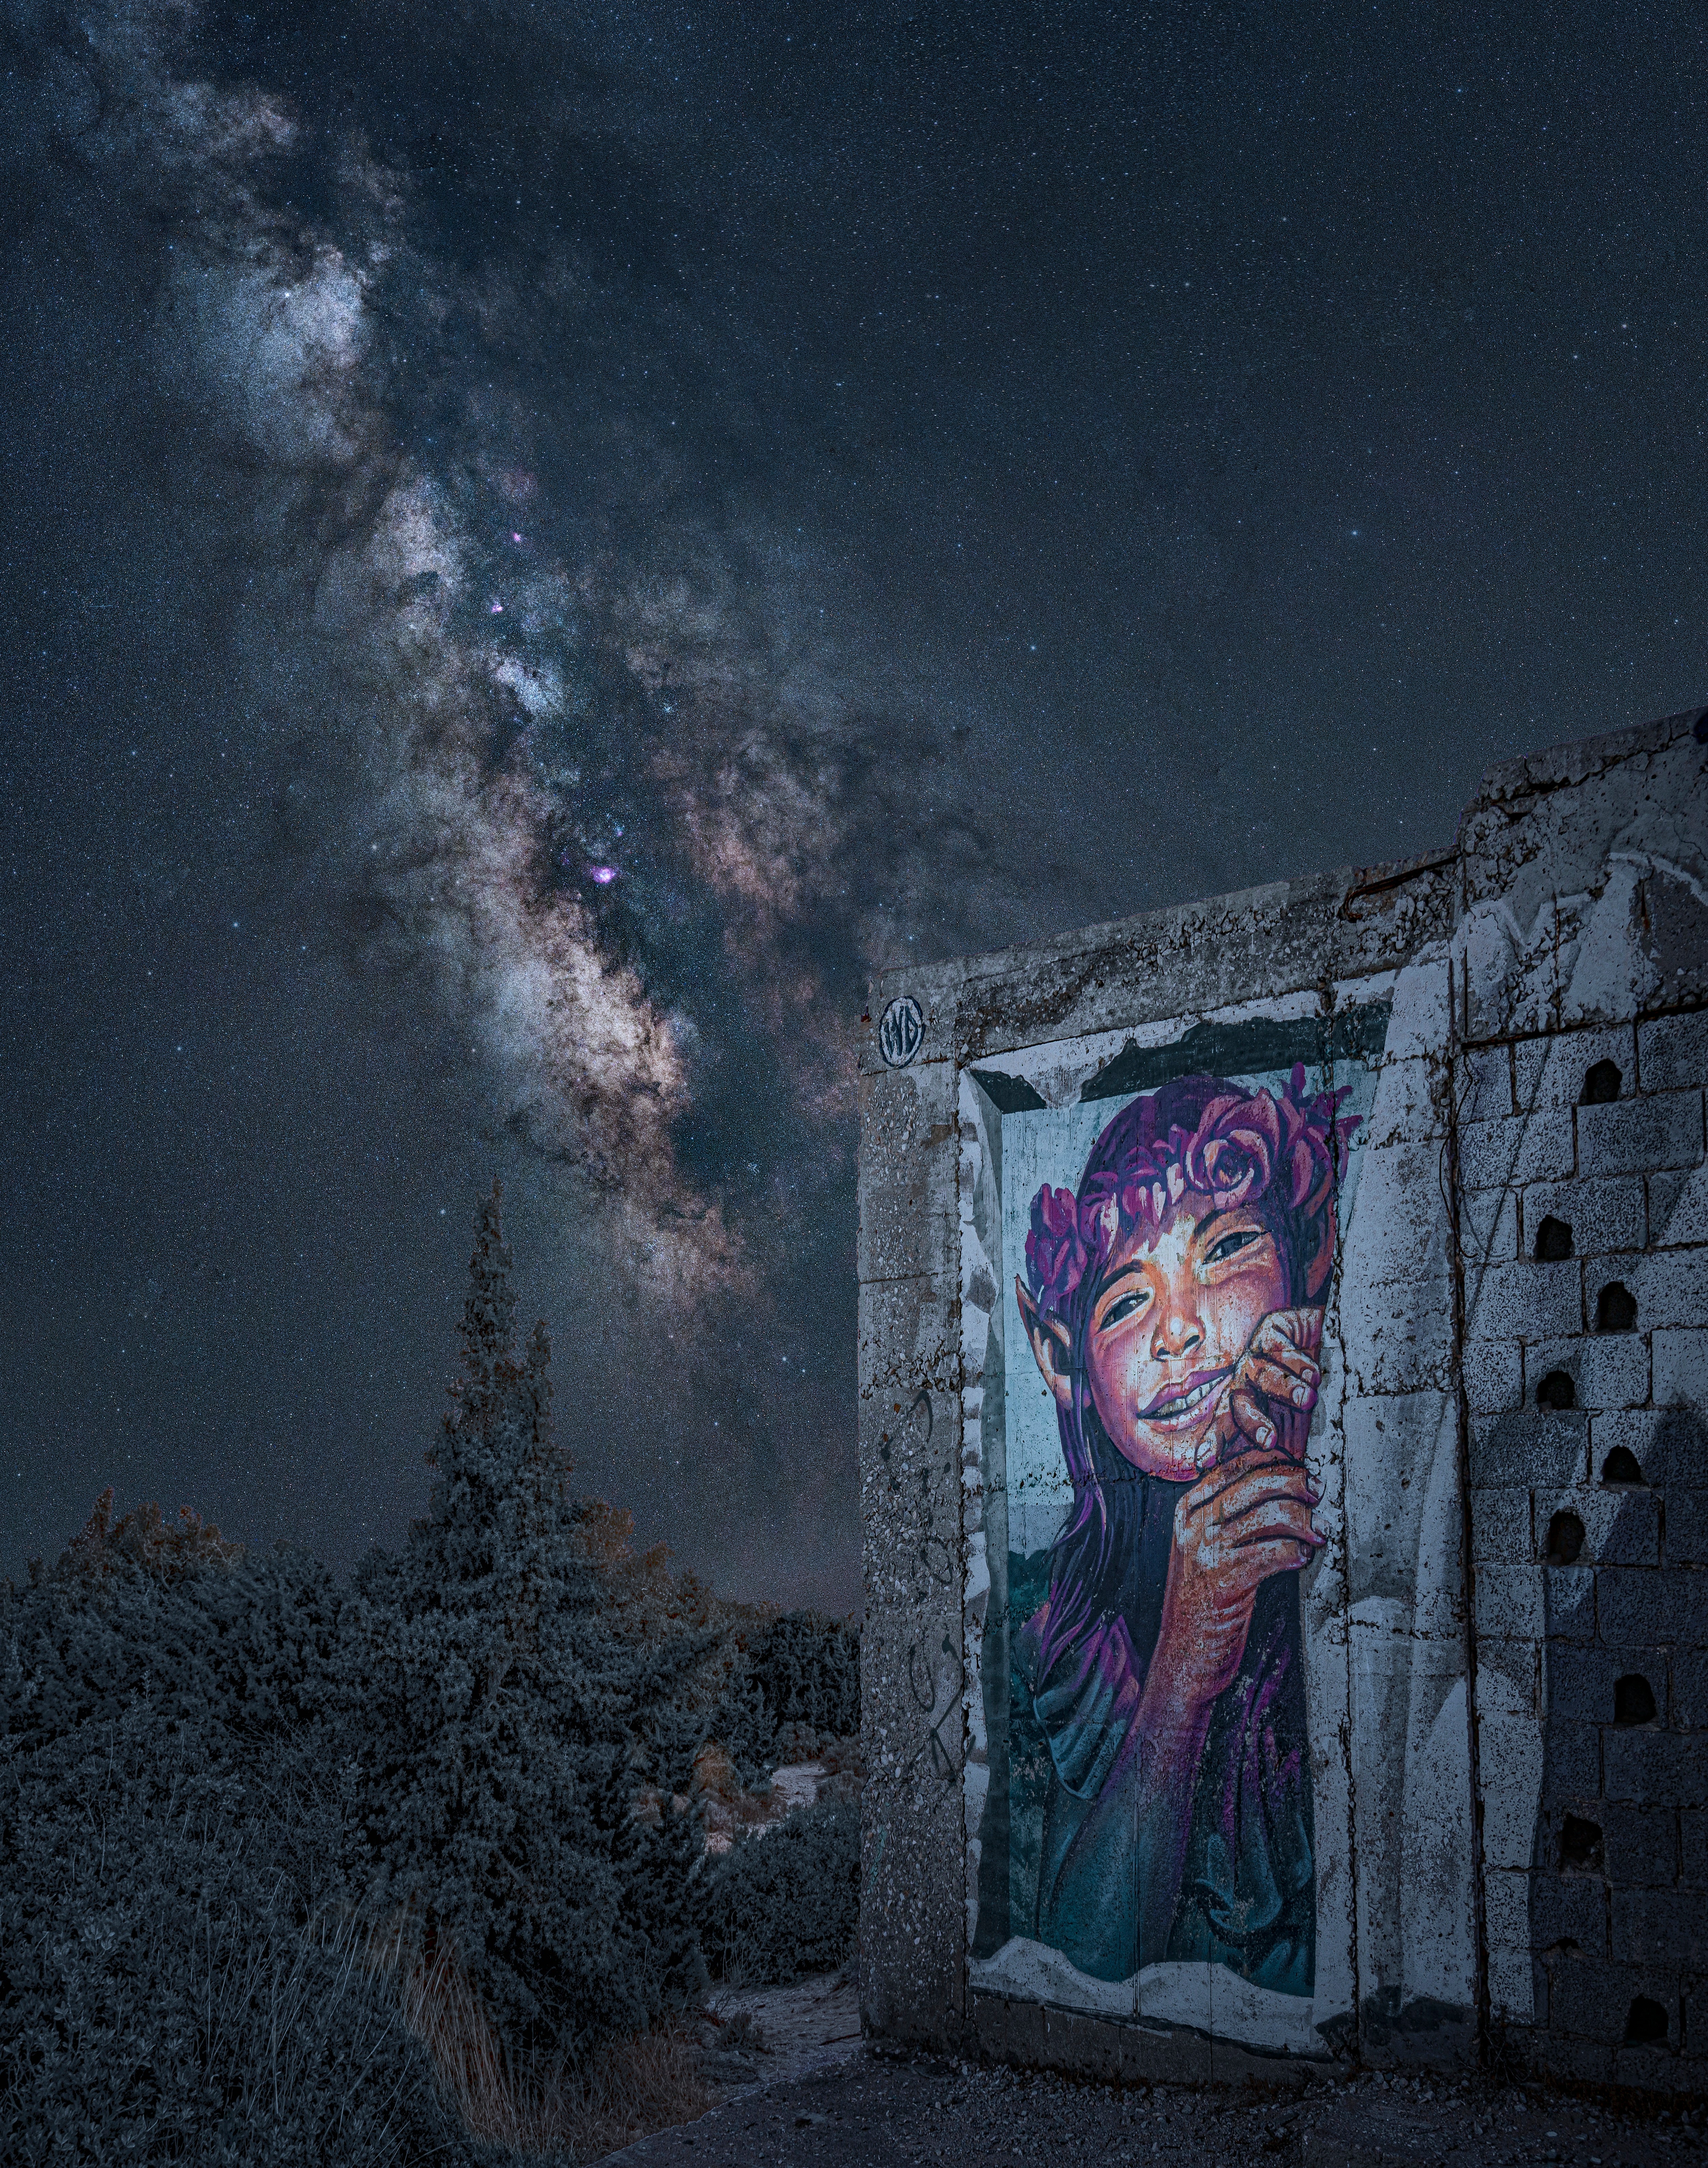 The Milky Way looms behind a graffito. (Photo: Derek Horlock)